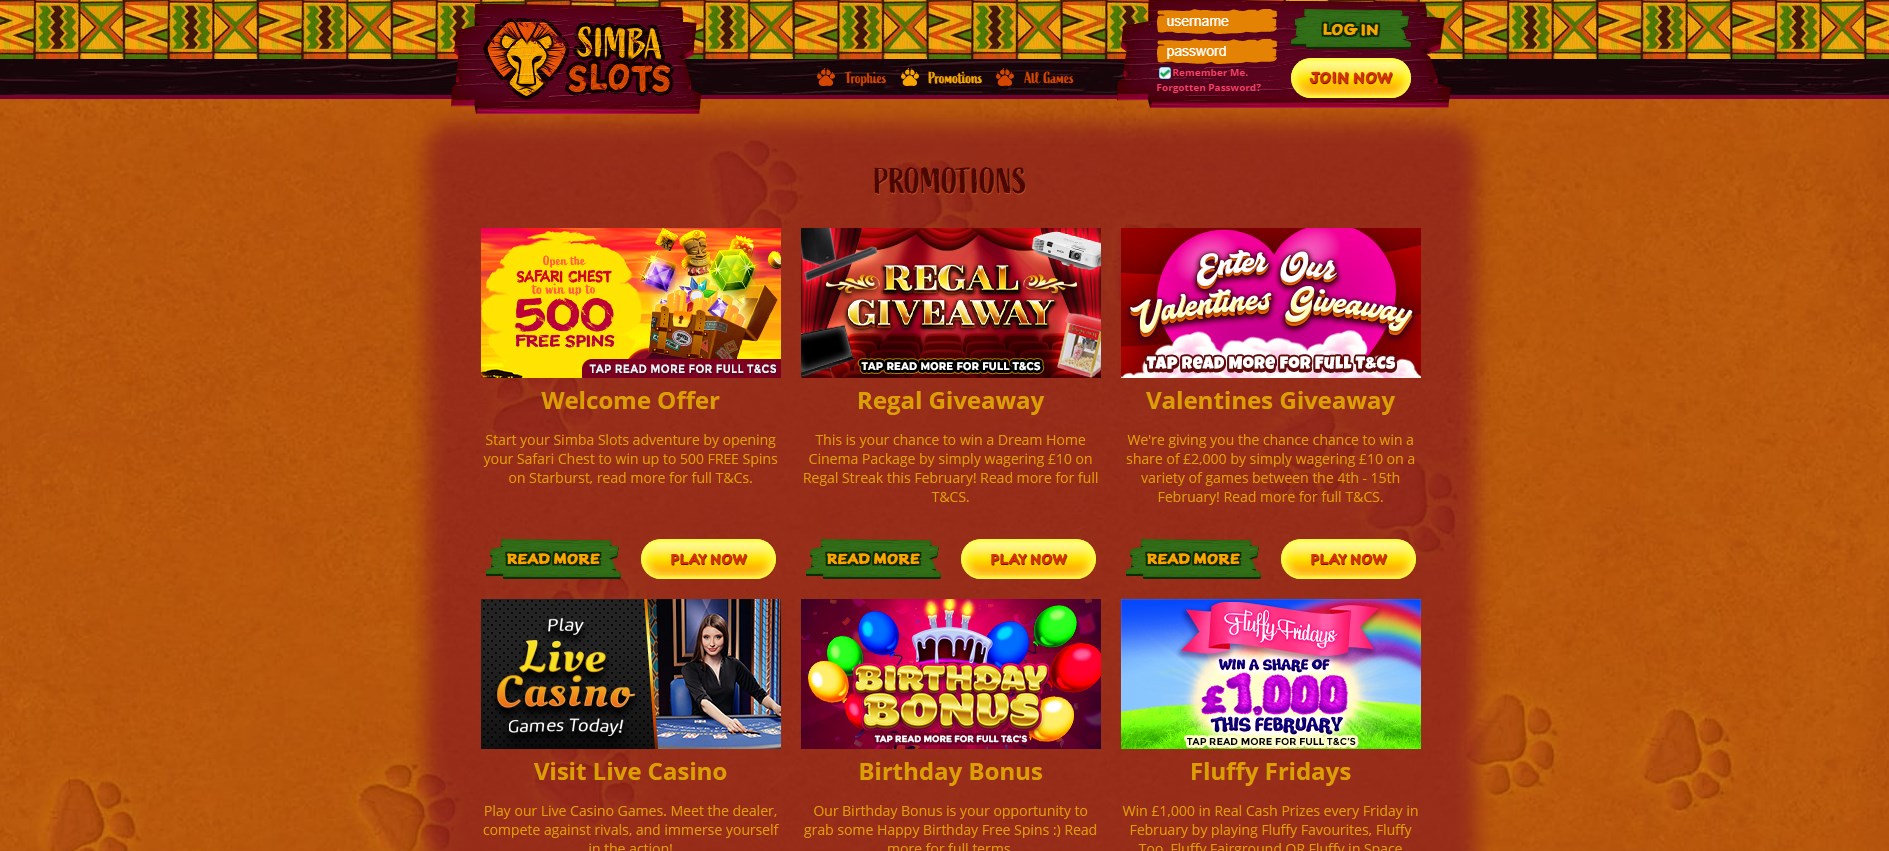 Simba Slots Casino No Deposit Bonus